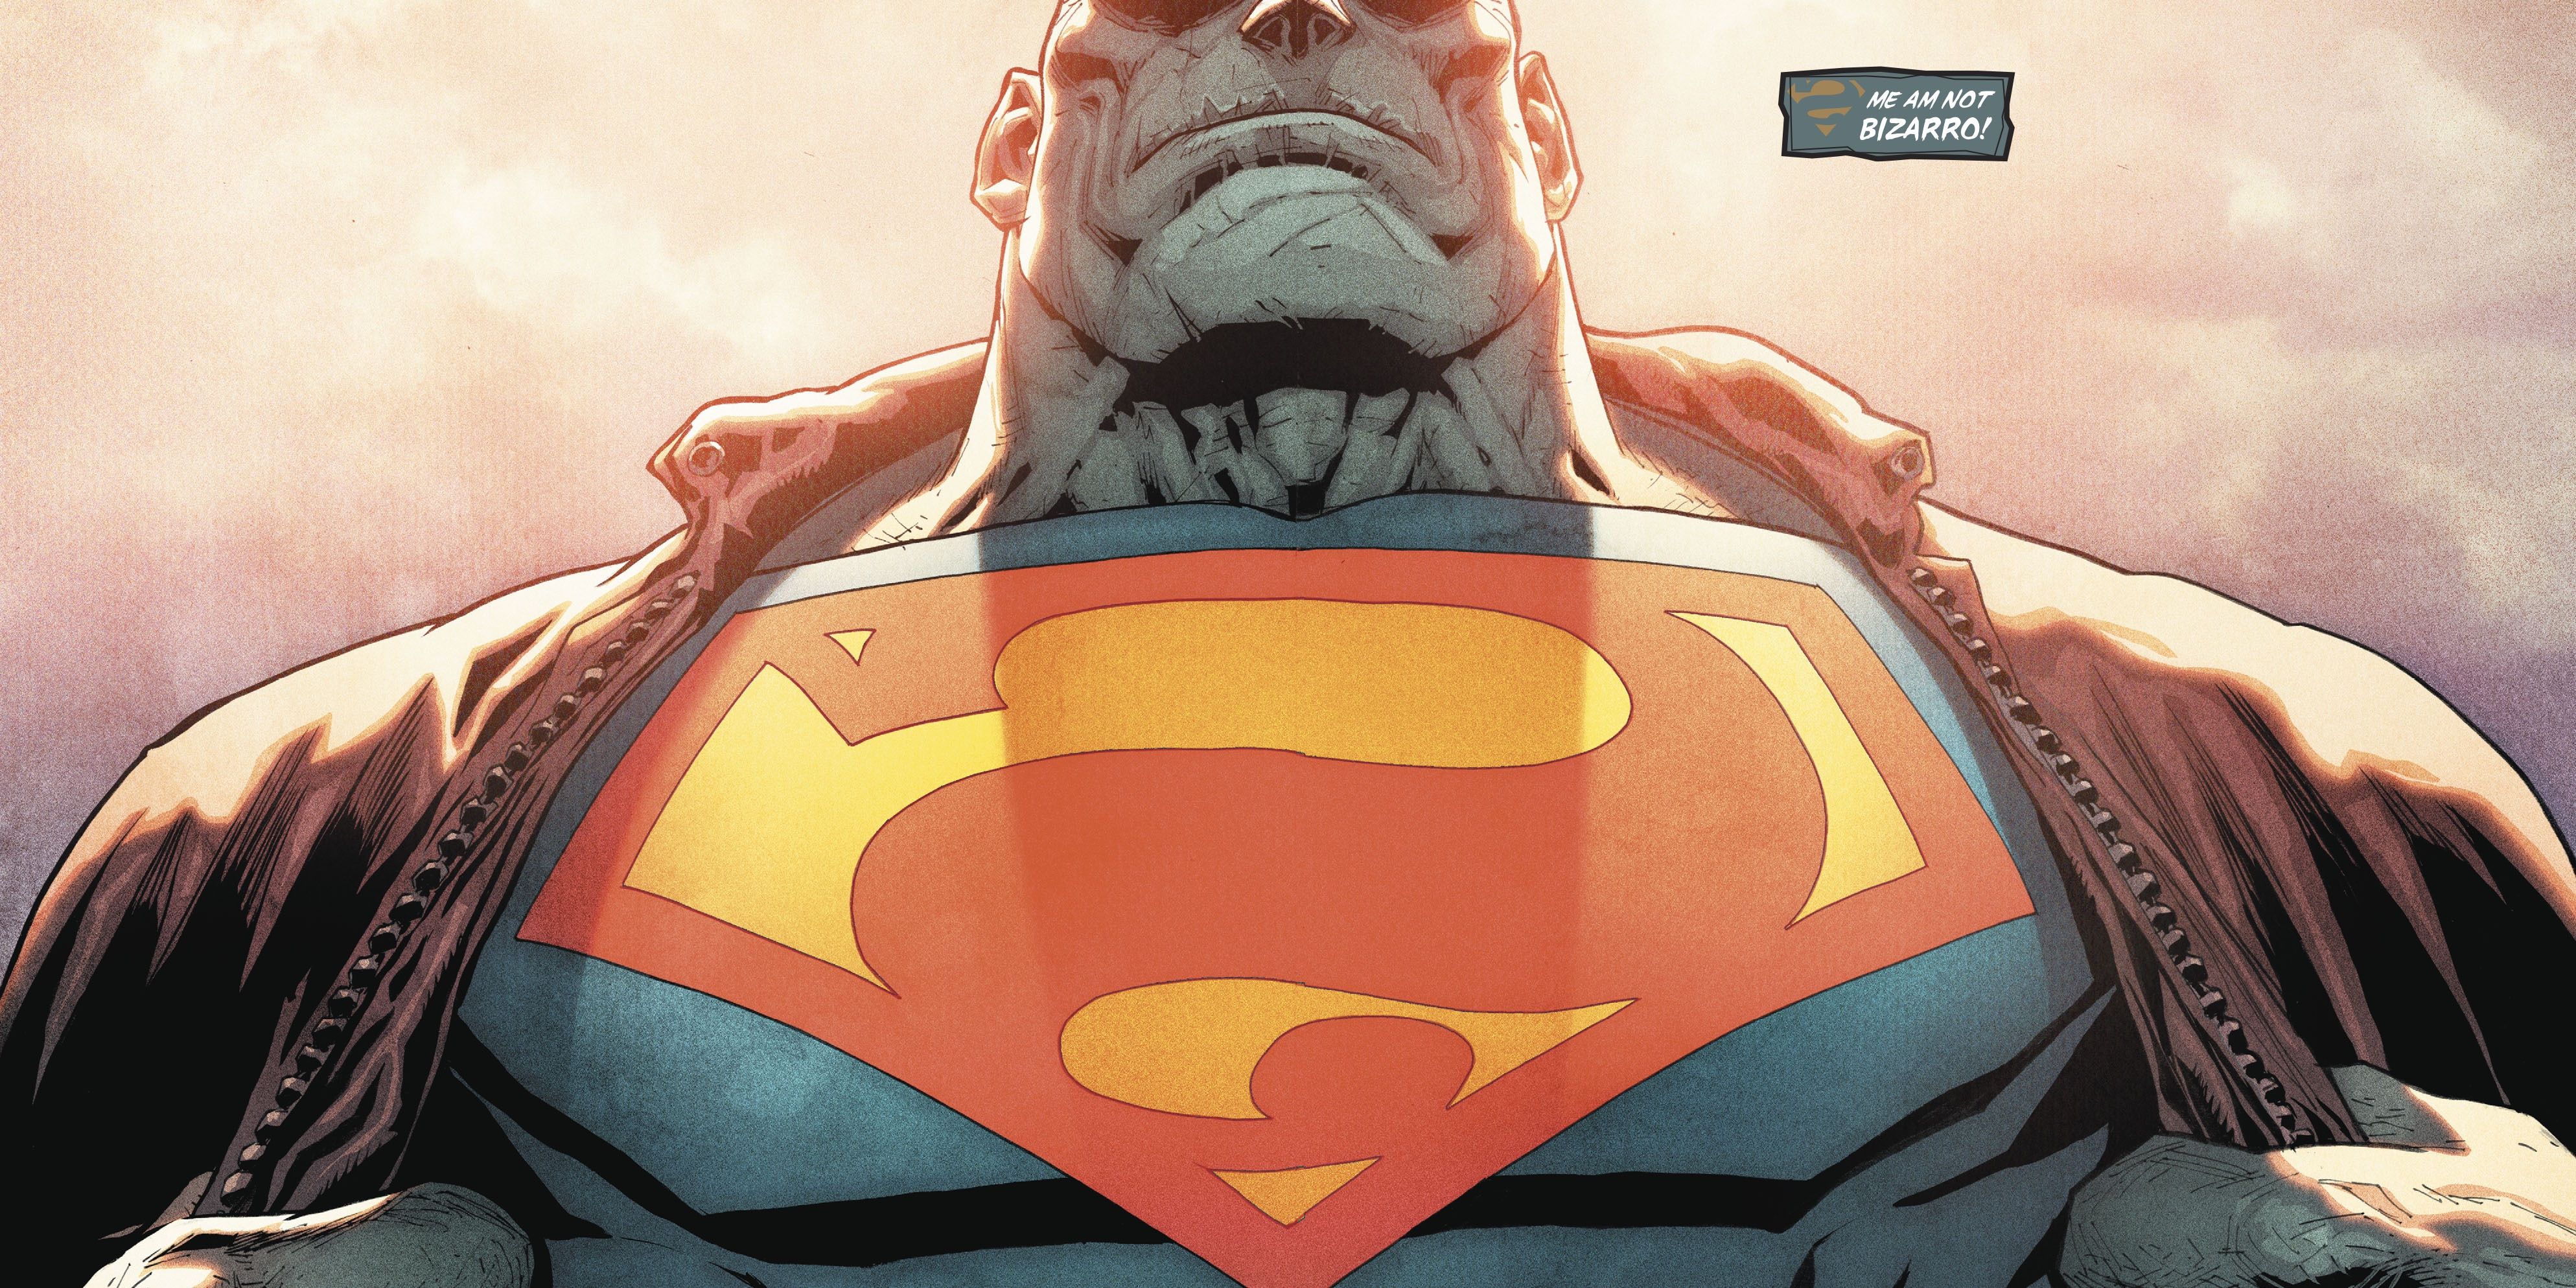 Bizarro Superman A Clone a Villain or a Superhero